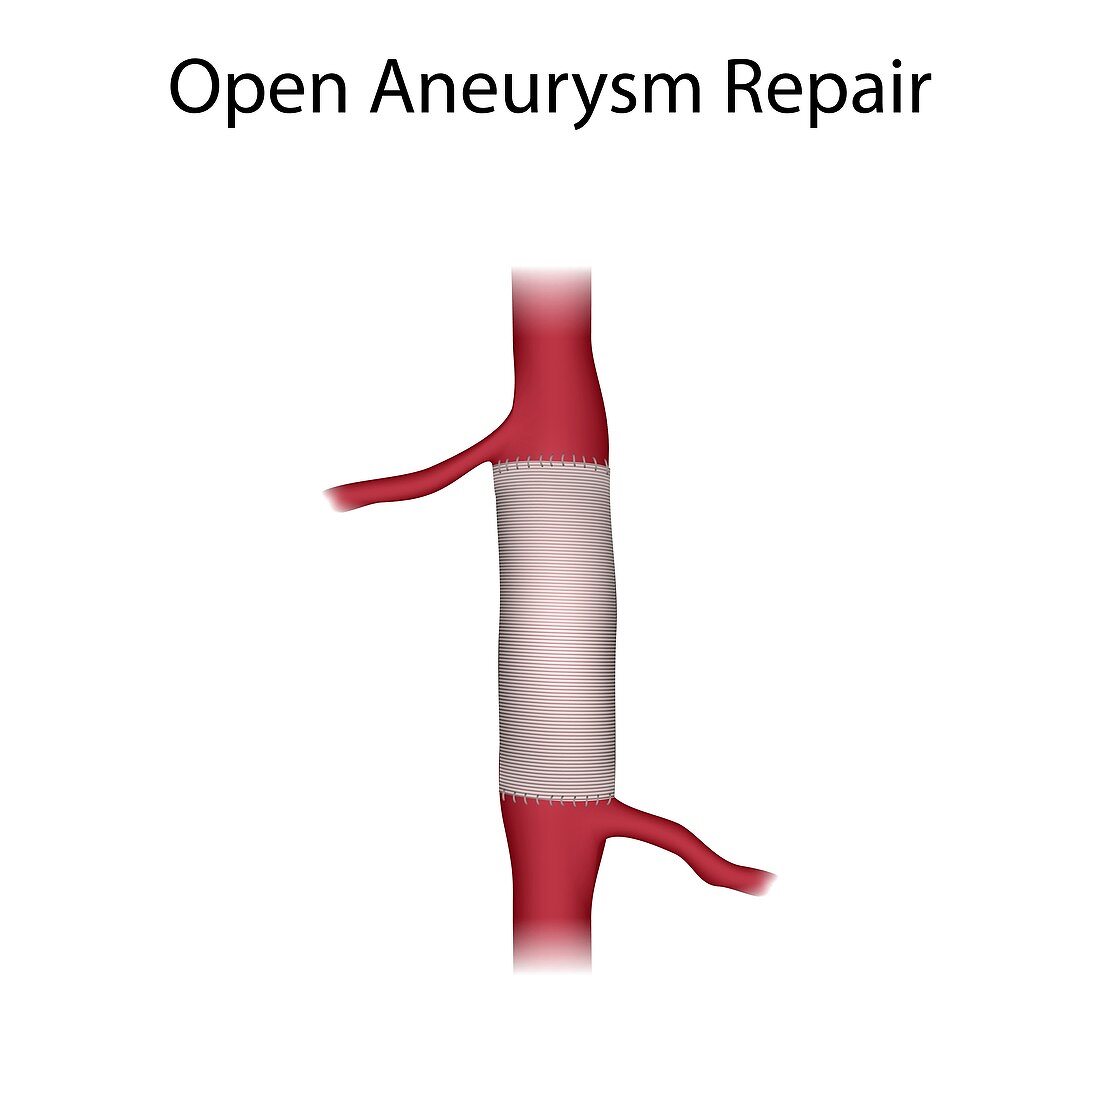 Open surgery aneurysm repair, illustration